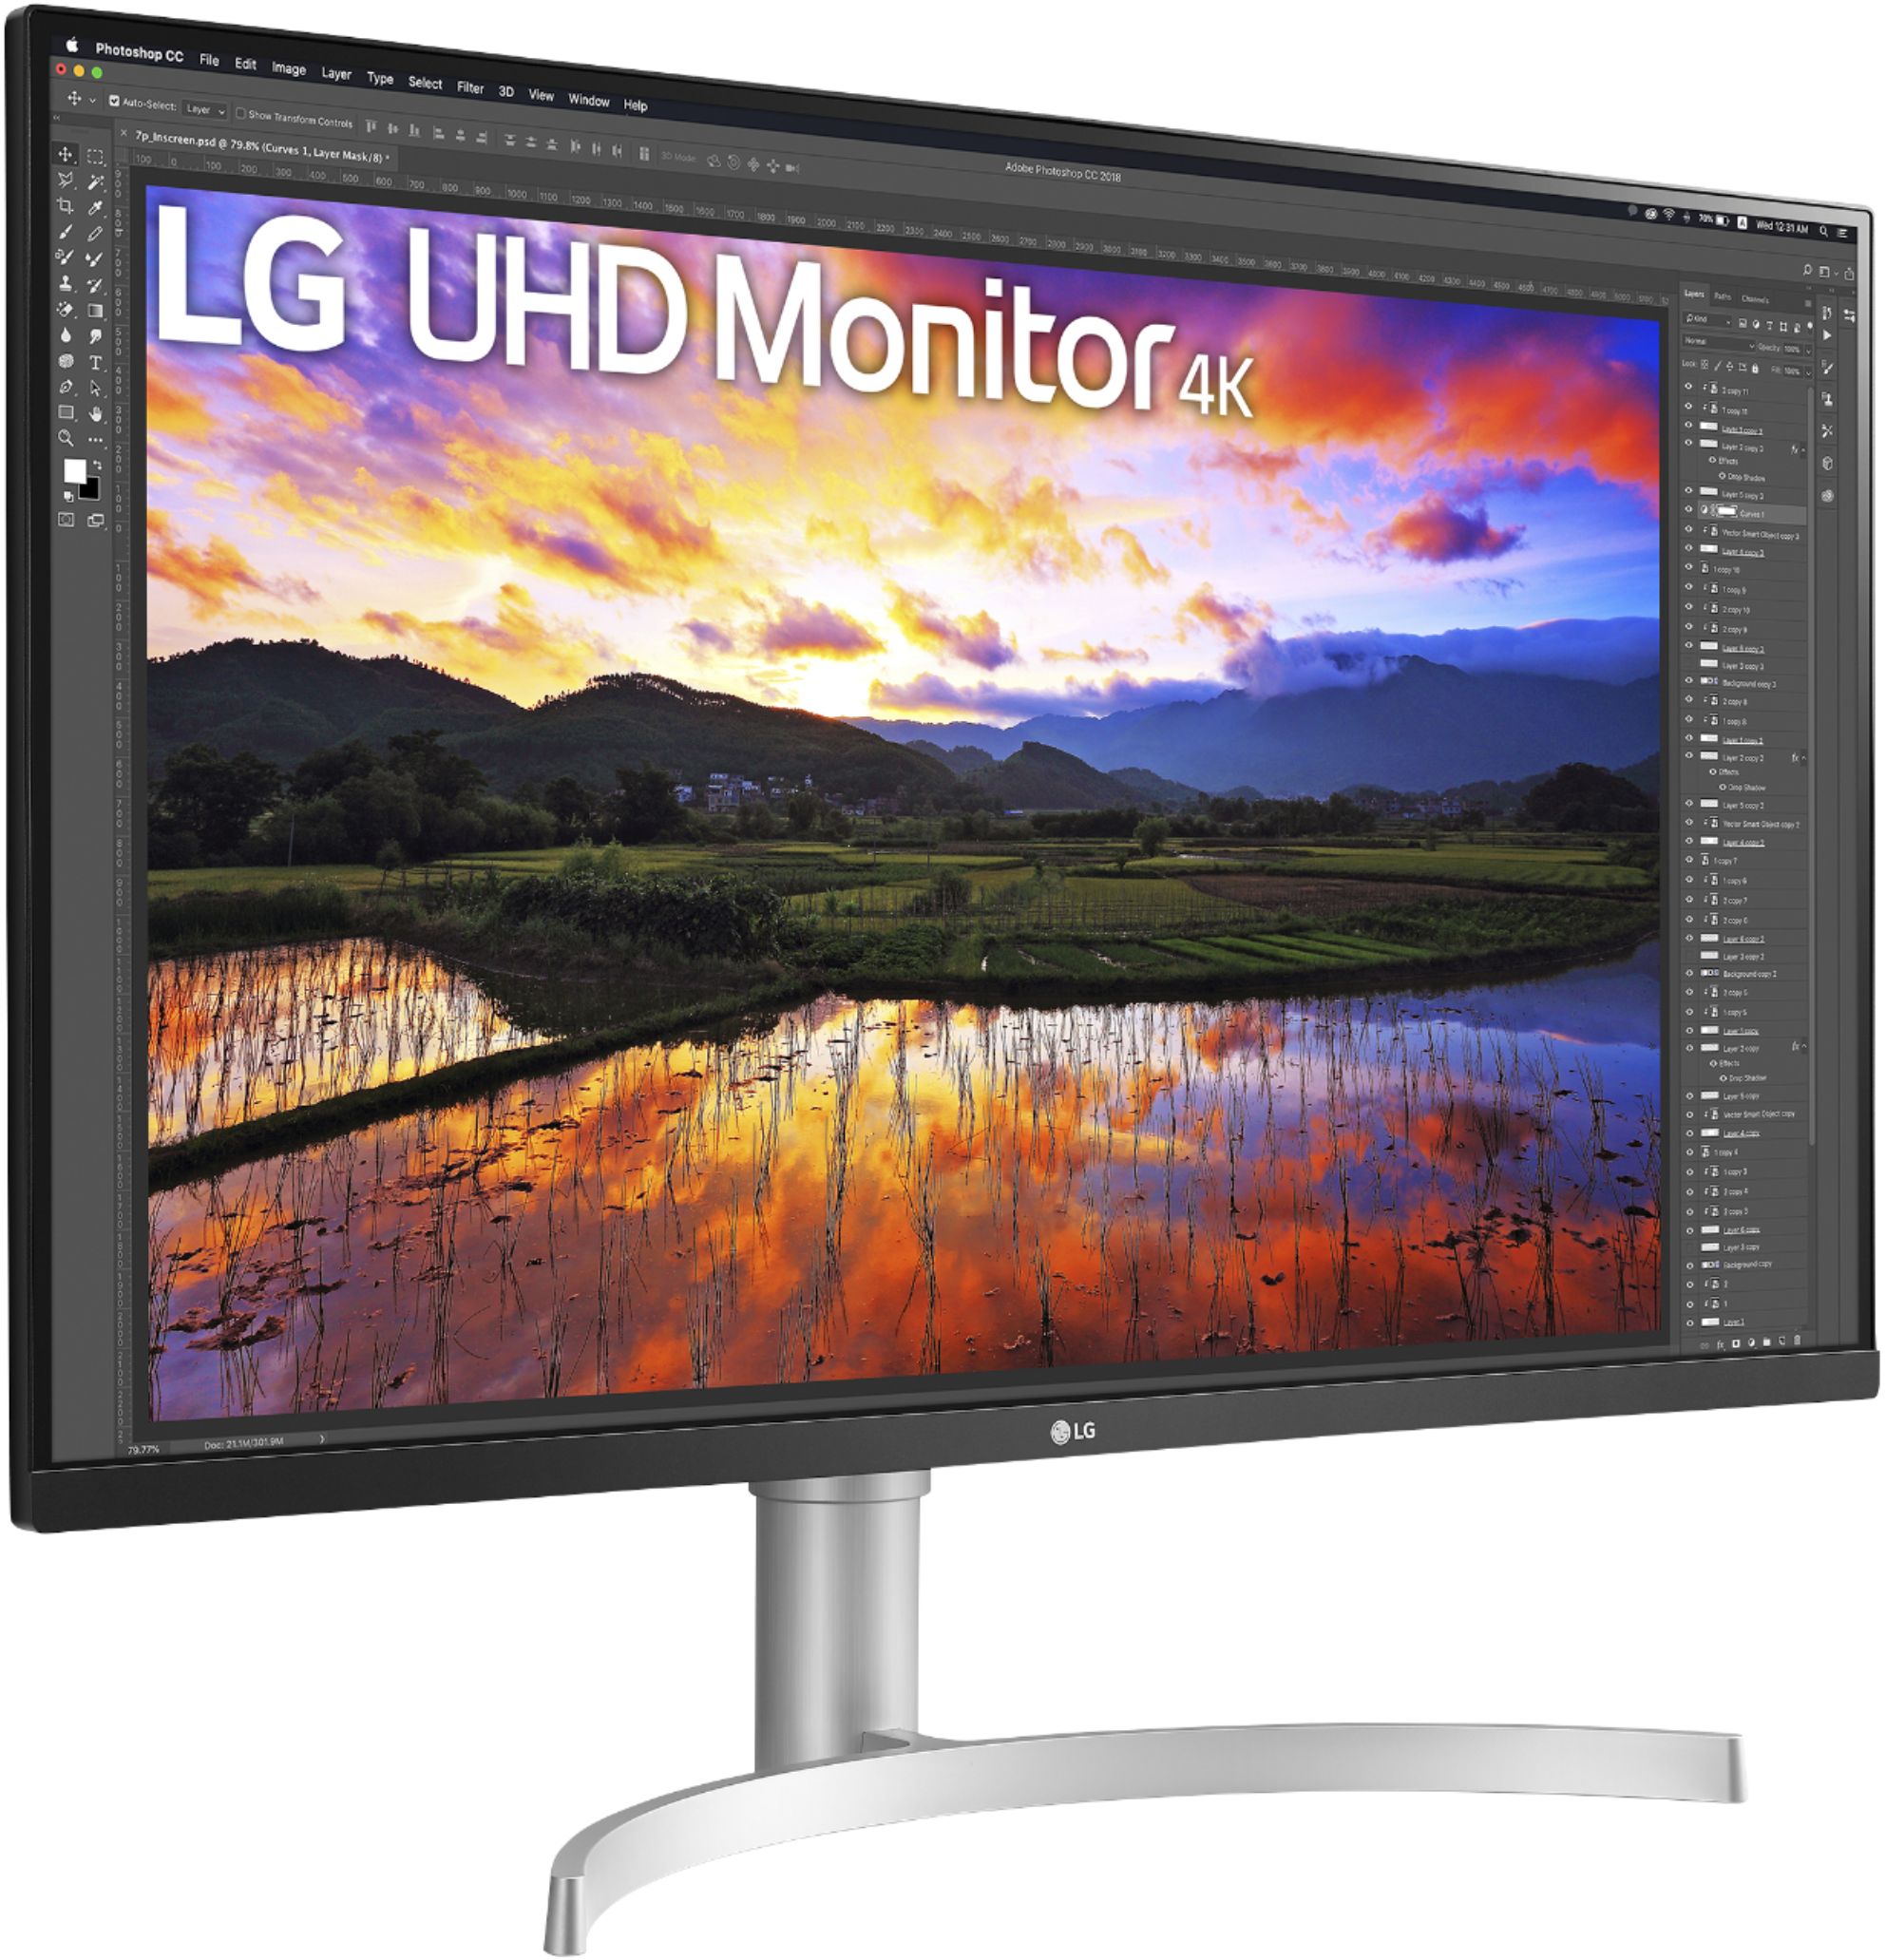 Angle View: LG - 35” VA HDR QHD UltraWide Curved Monitor - Black